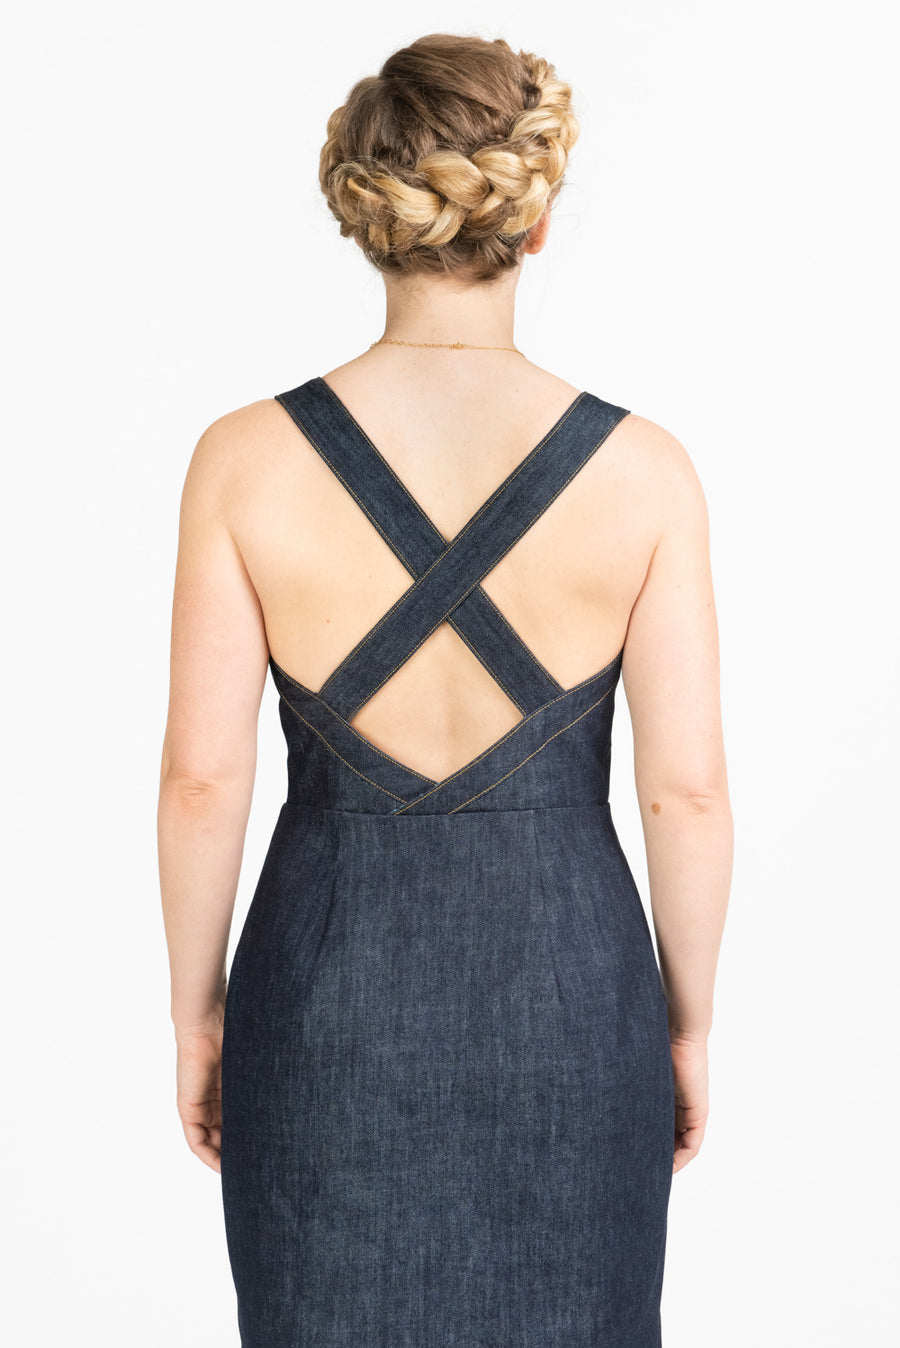 Bras for low cut dresses — Blog — Poplin Style Direction